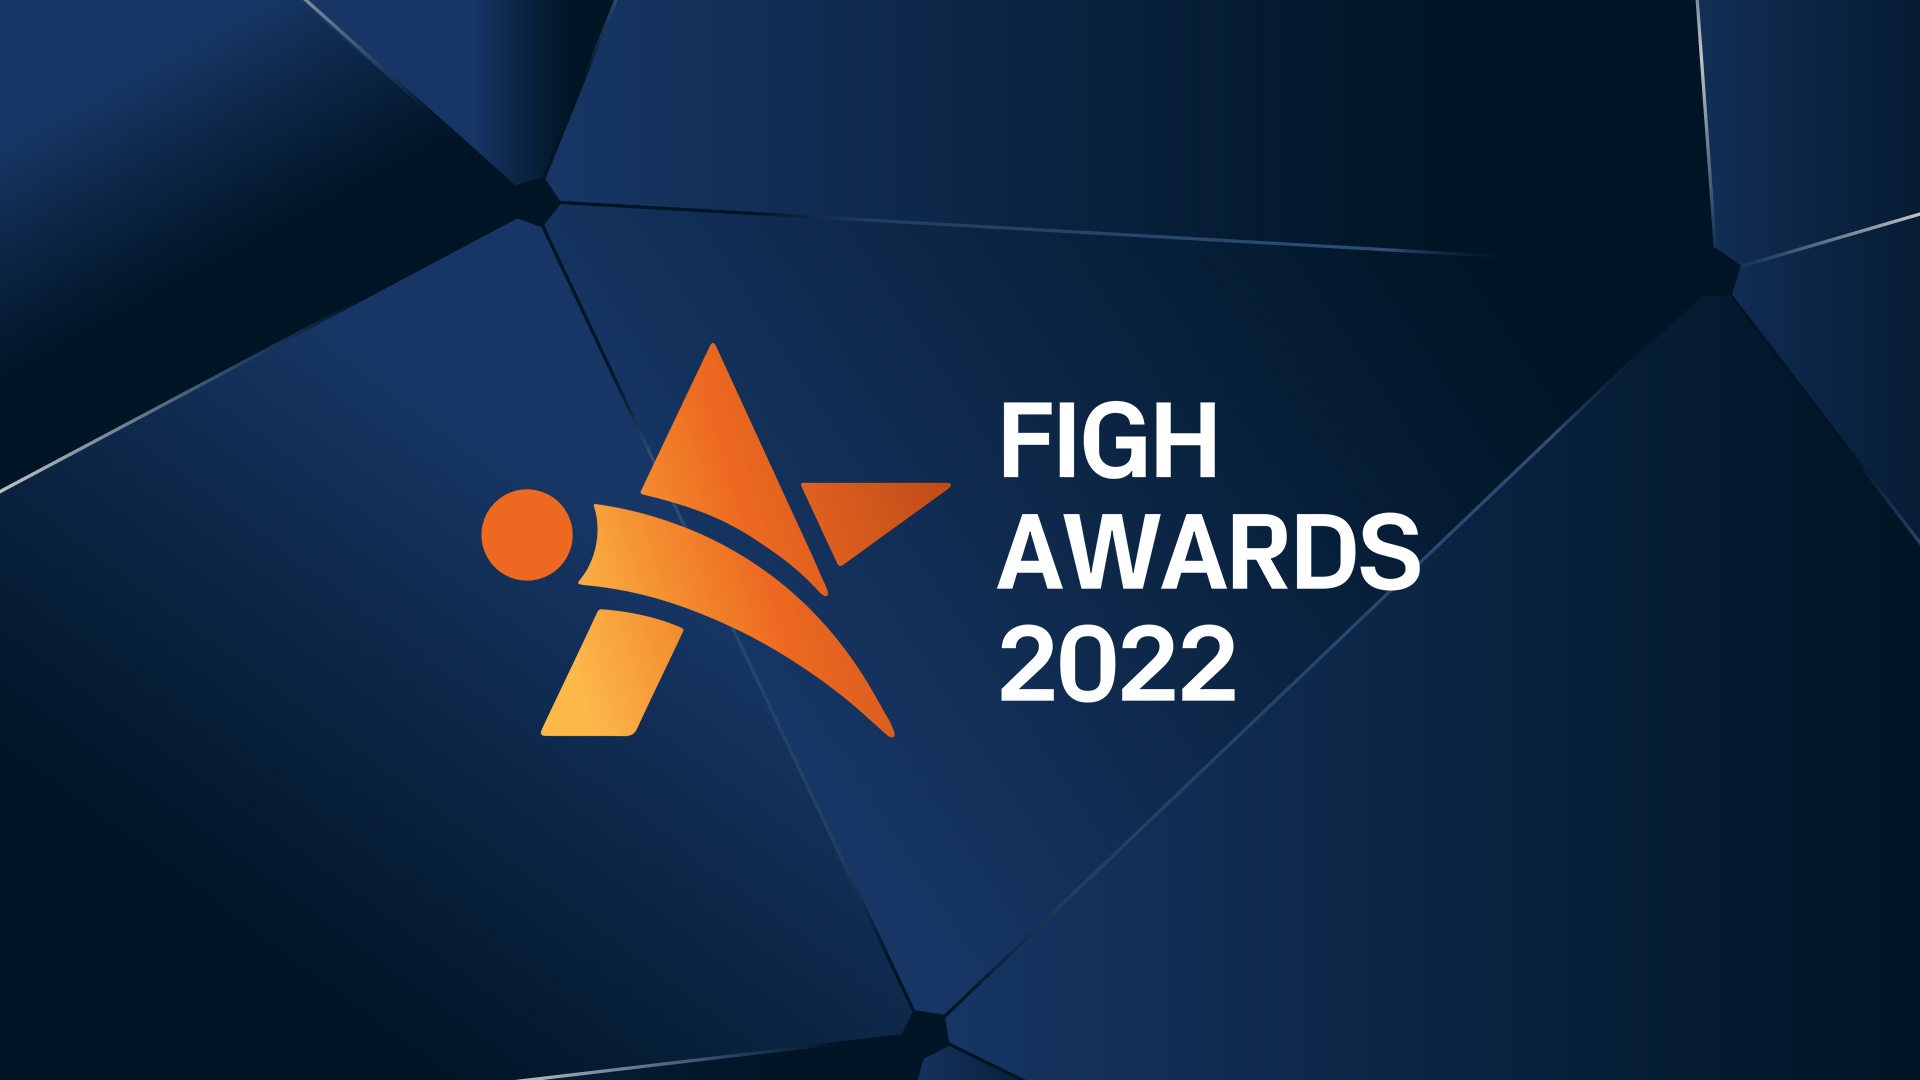 images/2022/copertina-figh-awards-2022-2.jpg